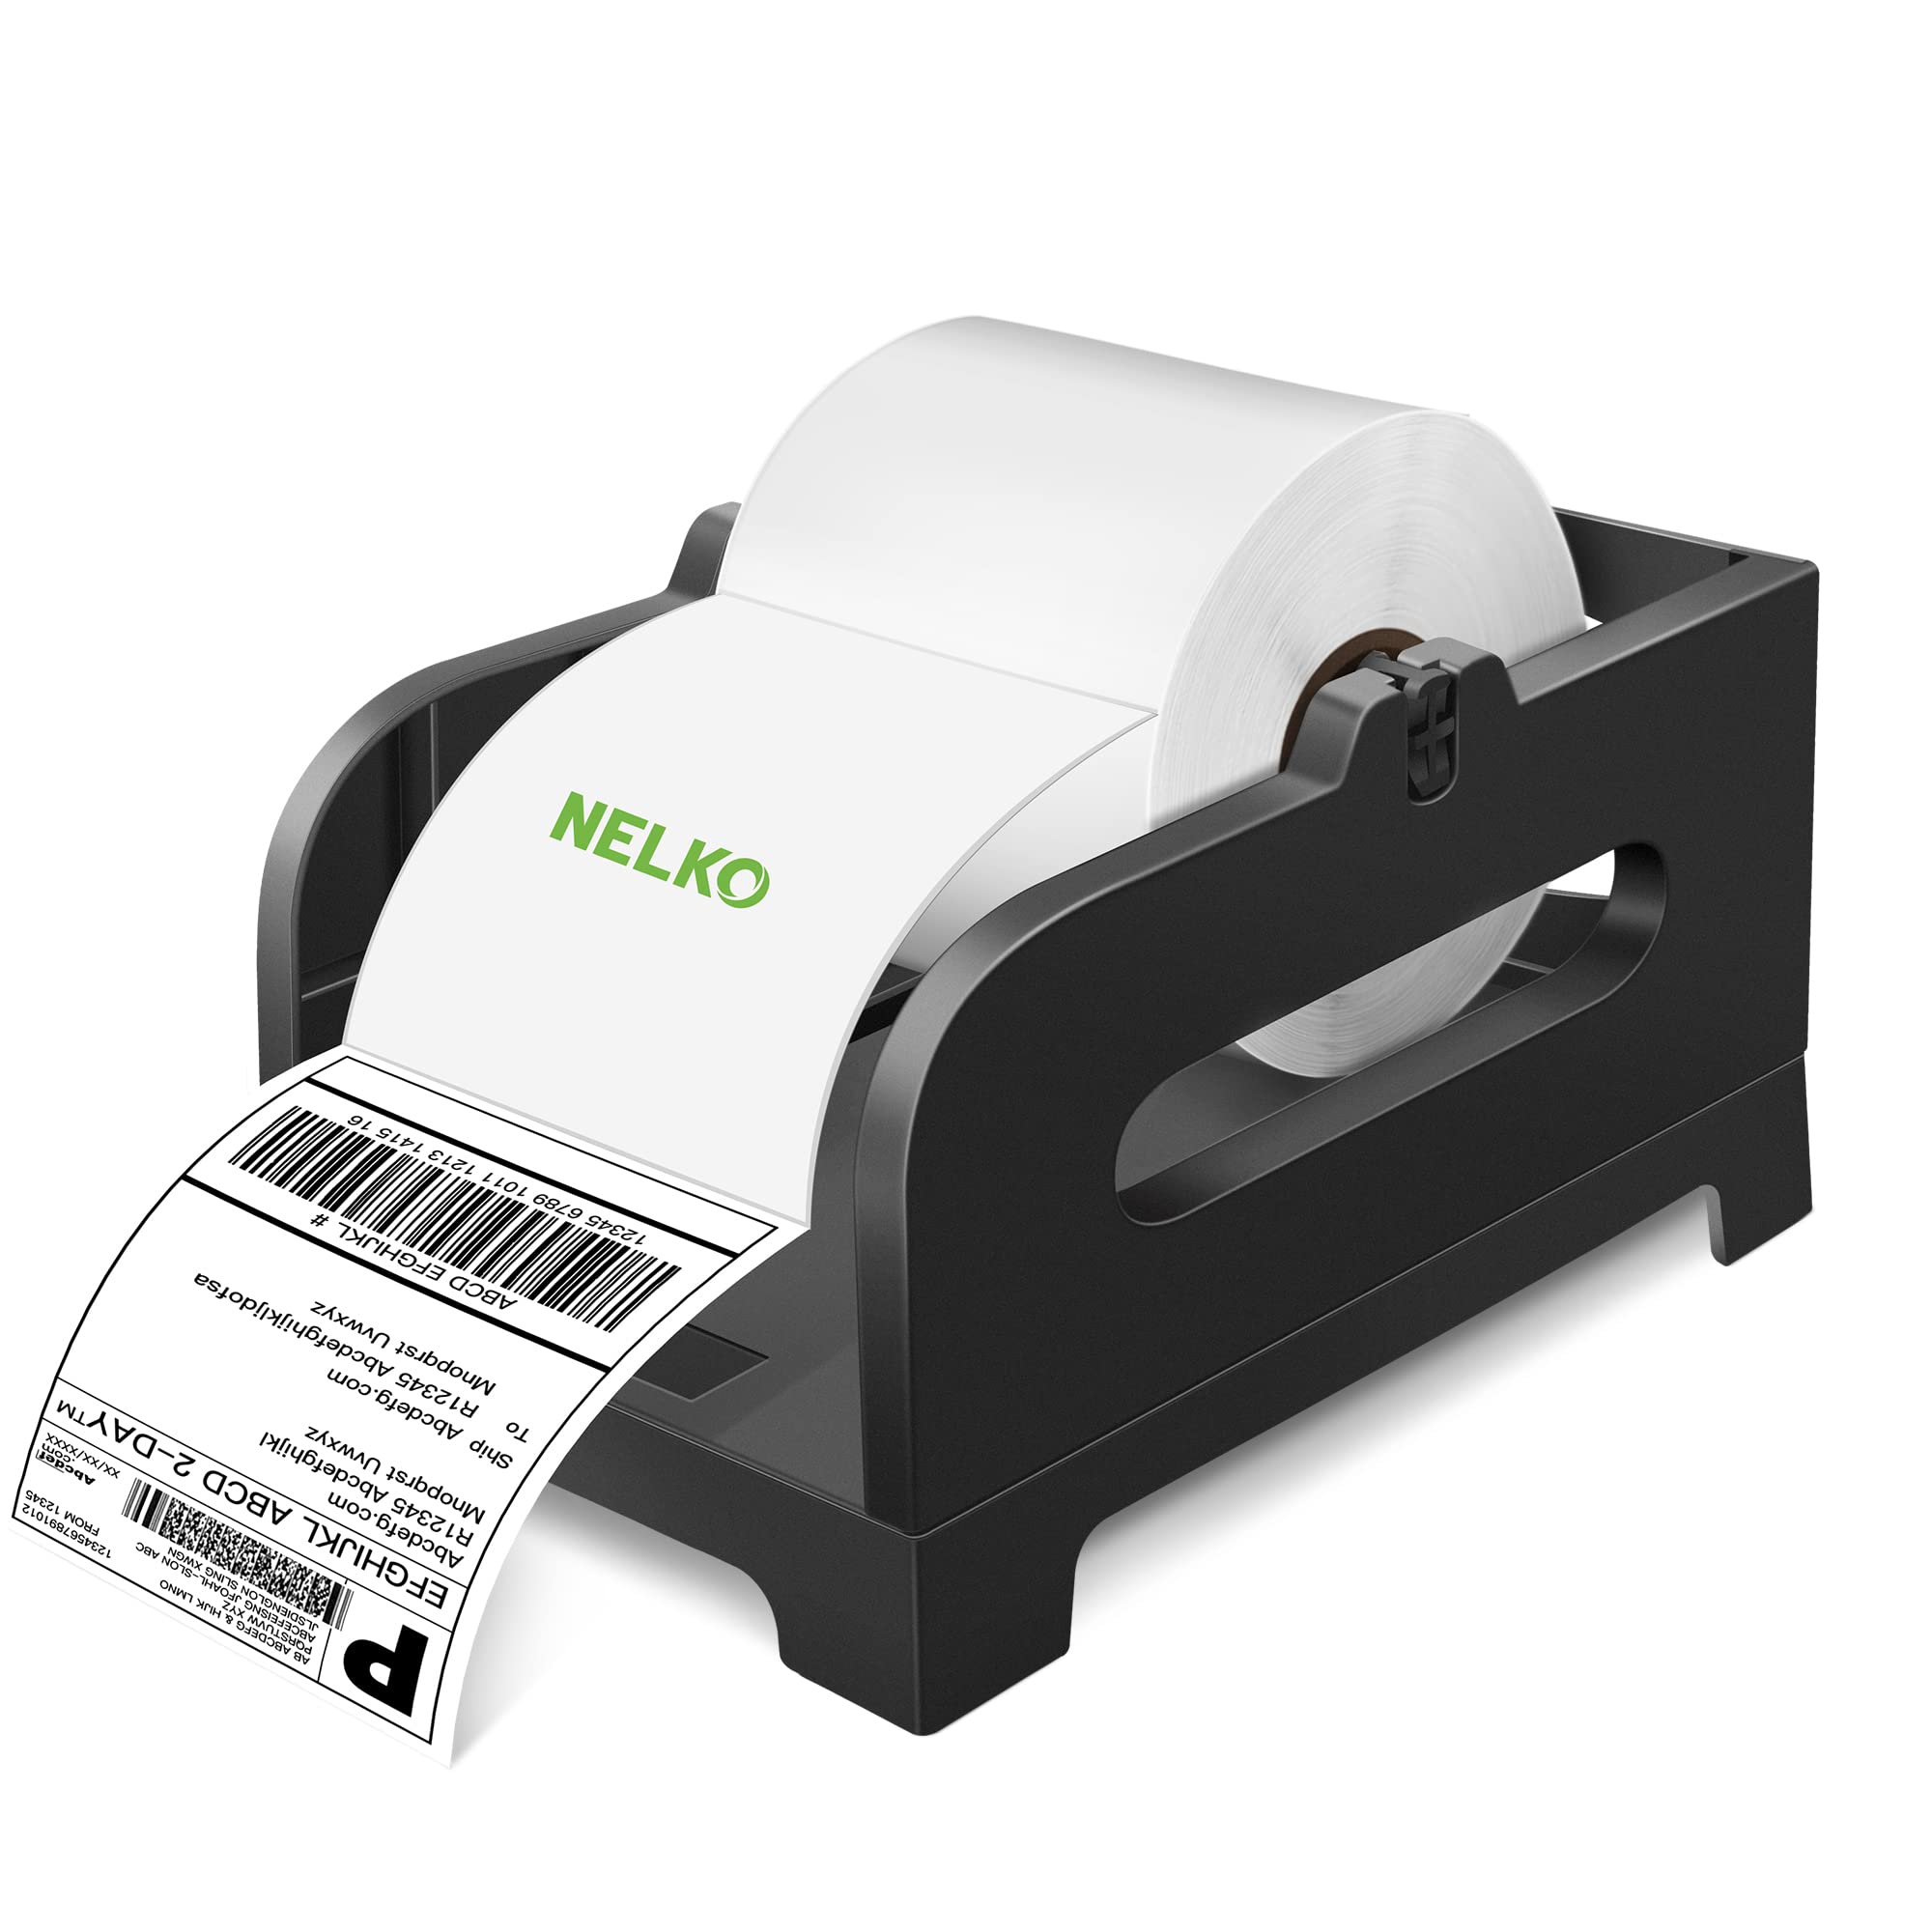 Bizggco Thermal Shipping Label Holder for Rolls & Fan-Folds, Desktop  Printer Stand & Fragile Sticker Dispenser Organizer - Home Office Accessory  for